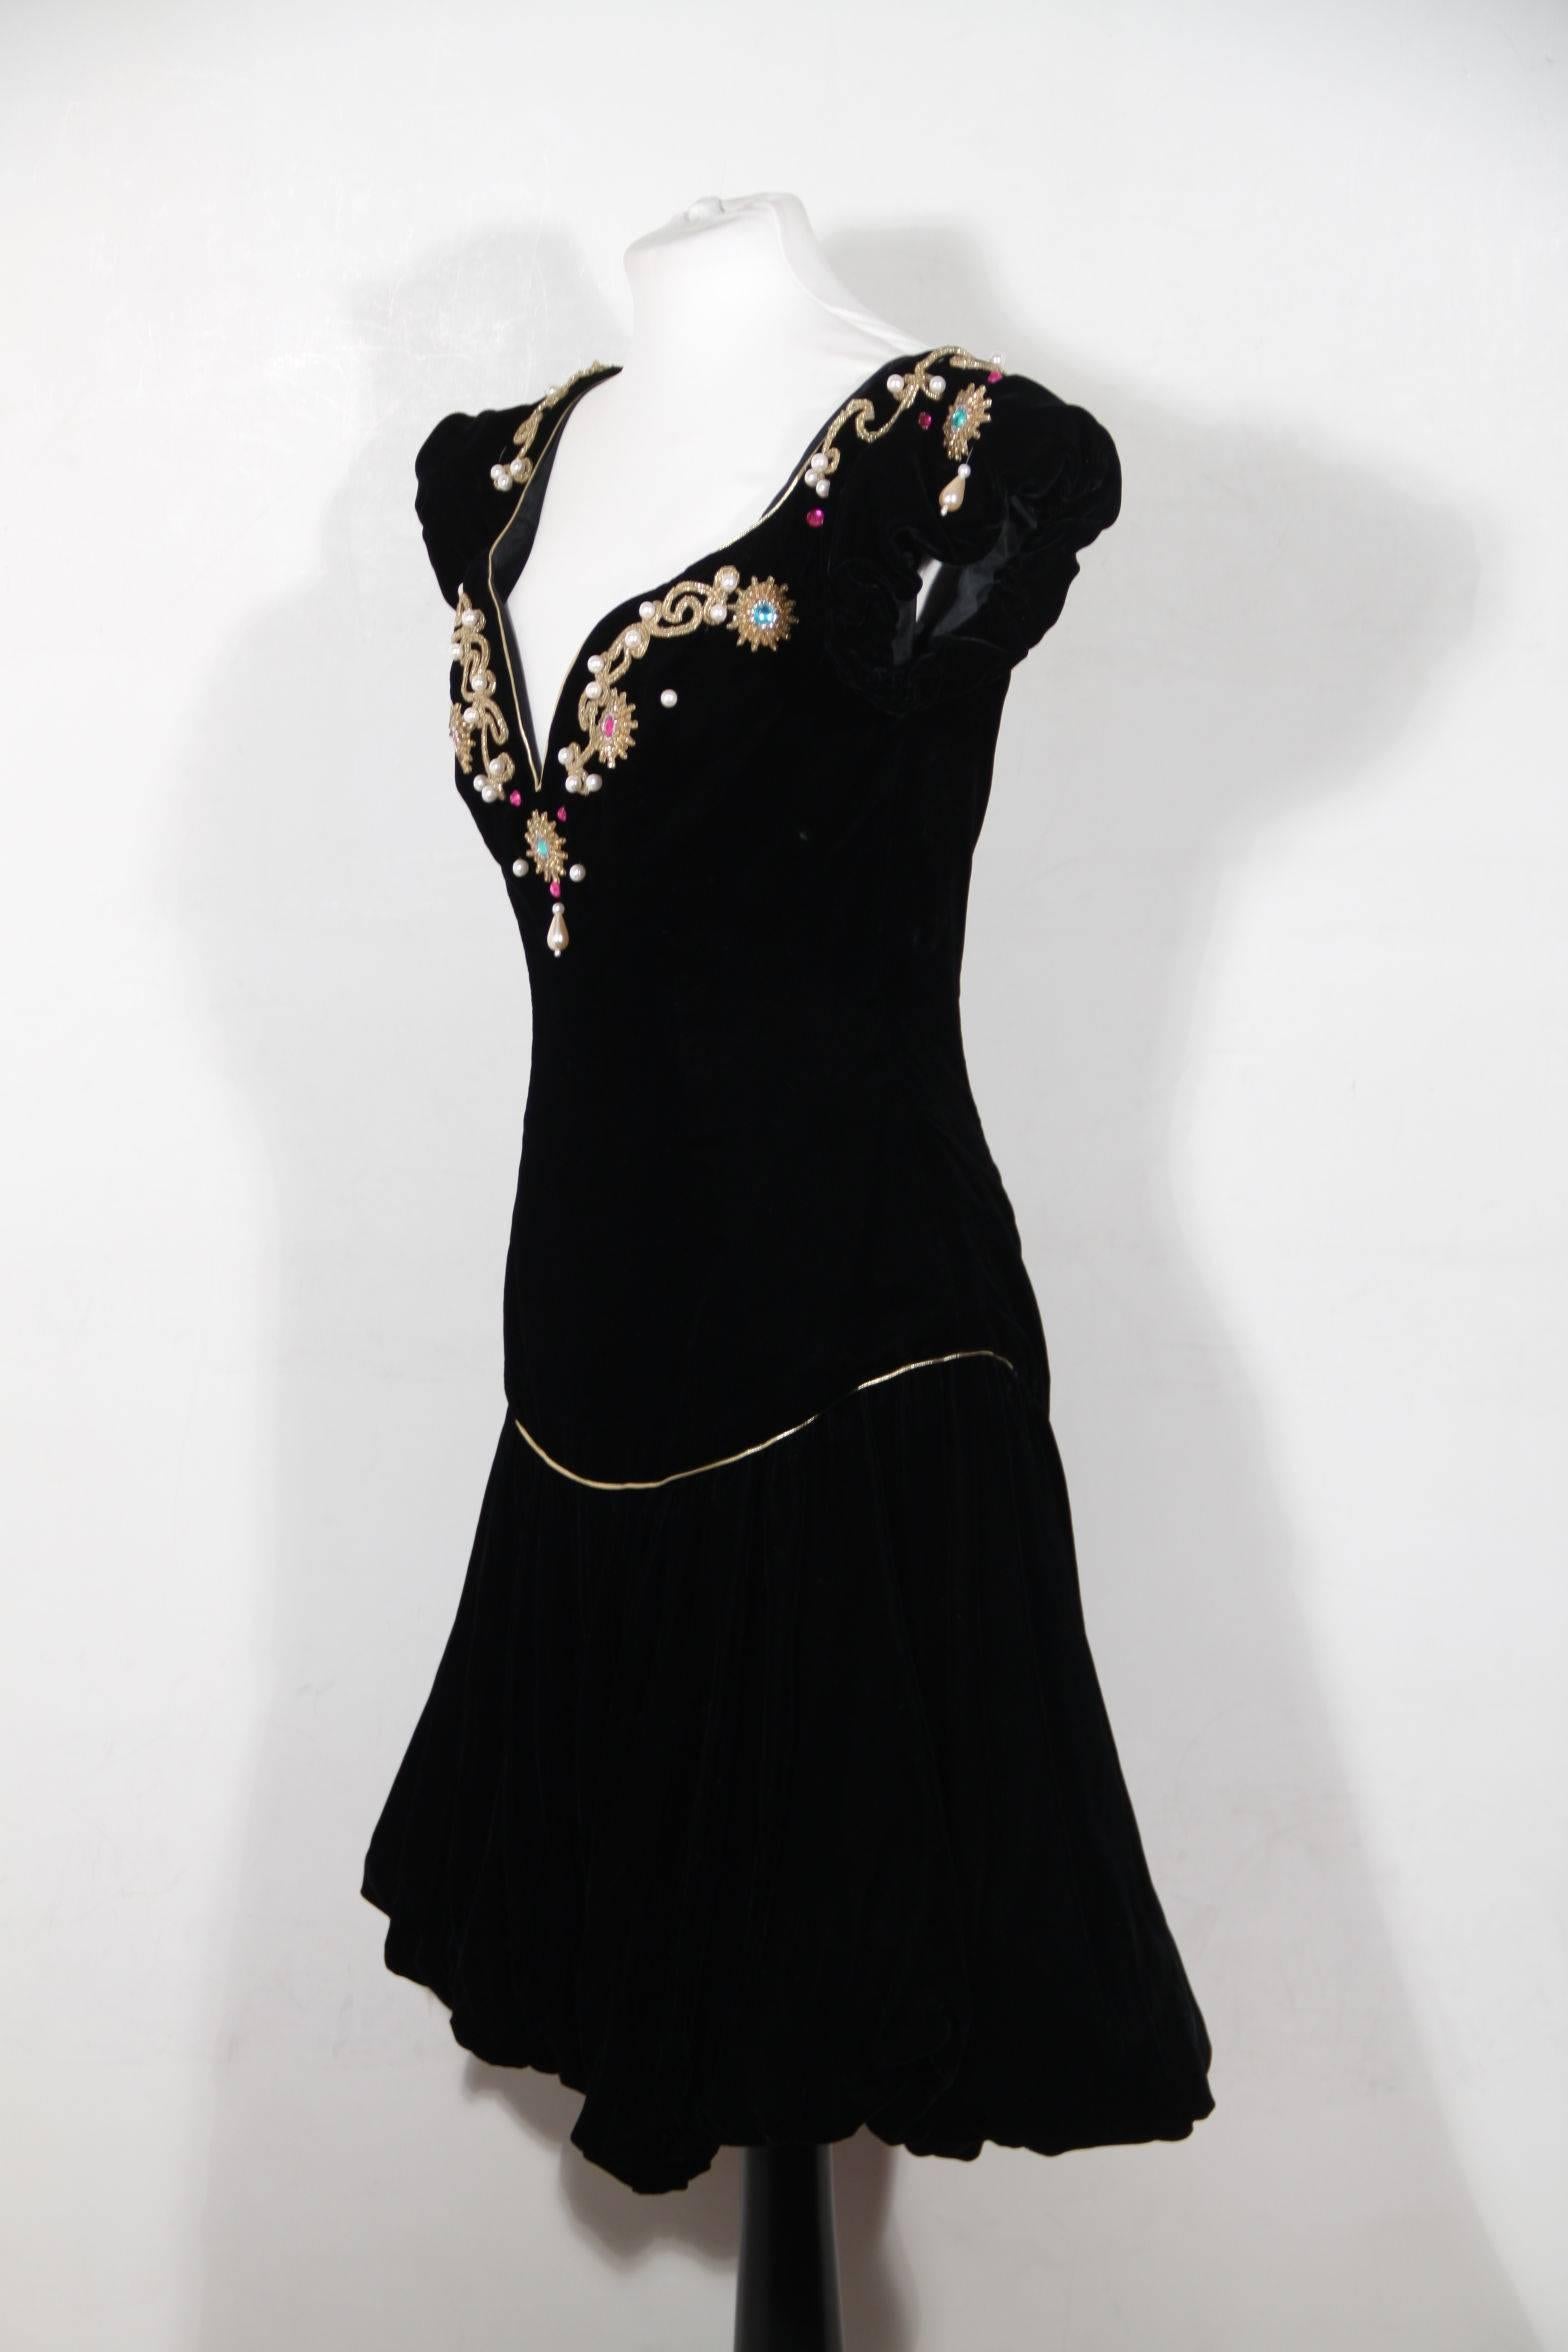 Women's DAVID FIELDEN LONDON Vintage Black Velvet COCKTAIL DRESS w/ EMBROIDERY Sz S